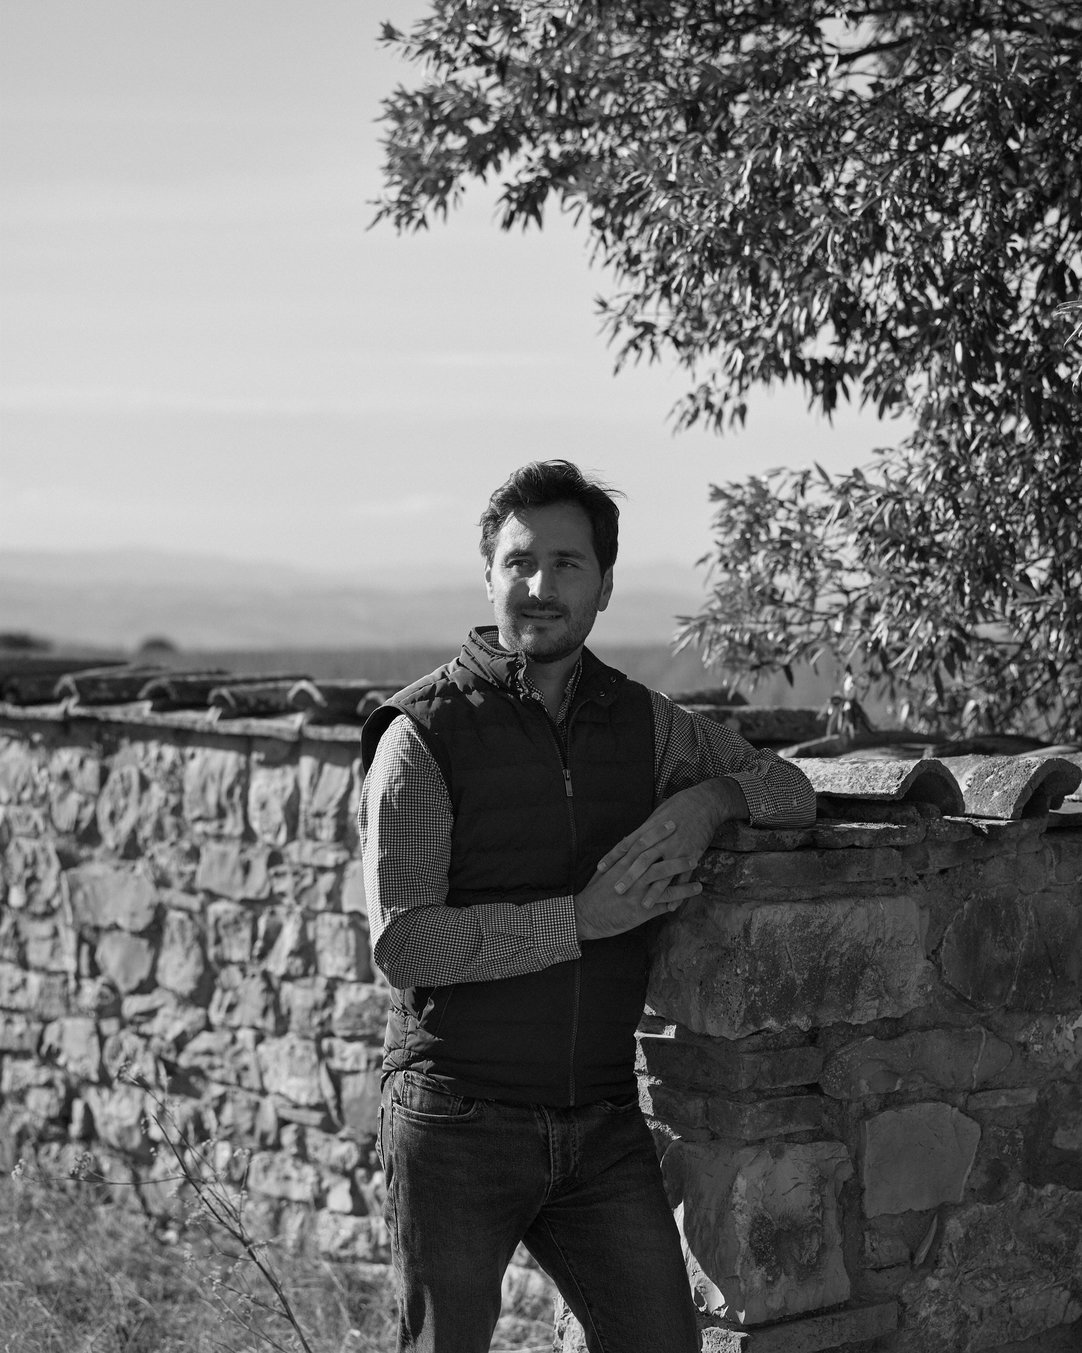 Alessandro Marini clips vines in Tenuta Luce's vineyard